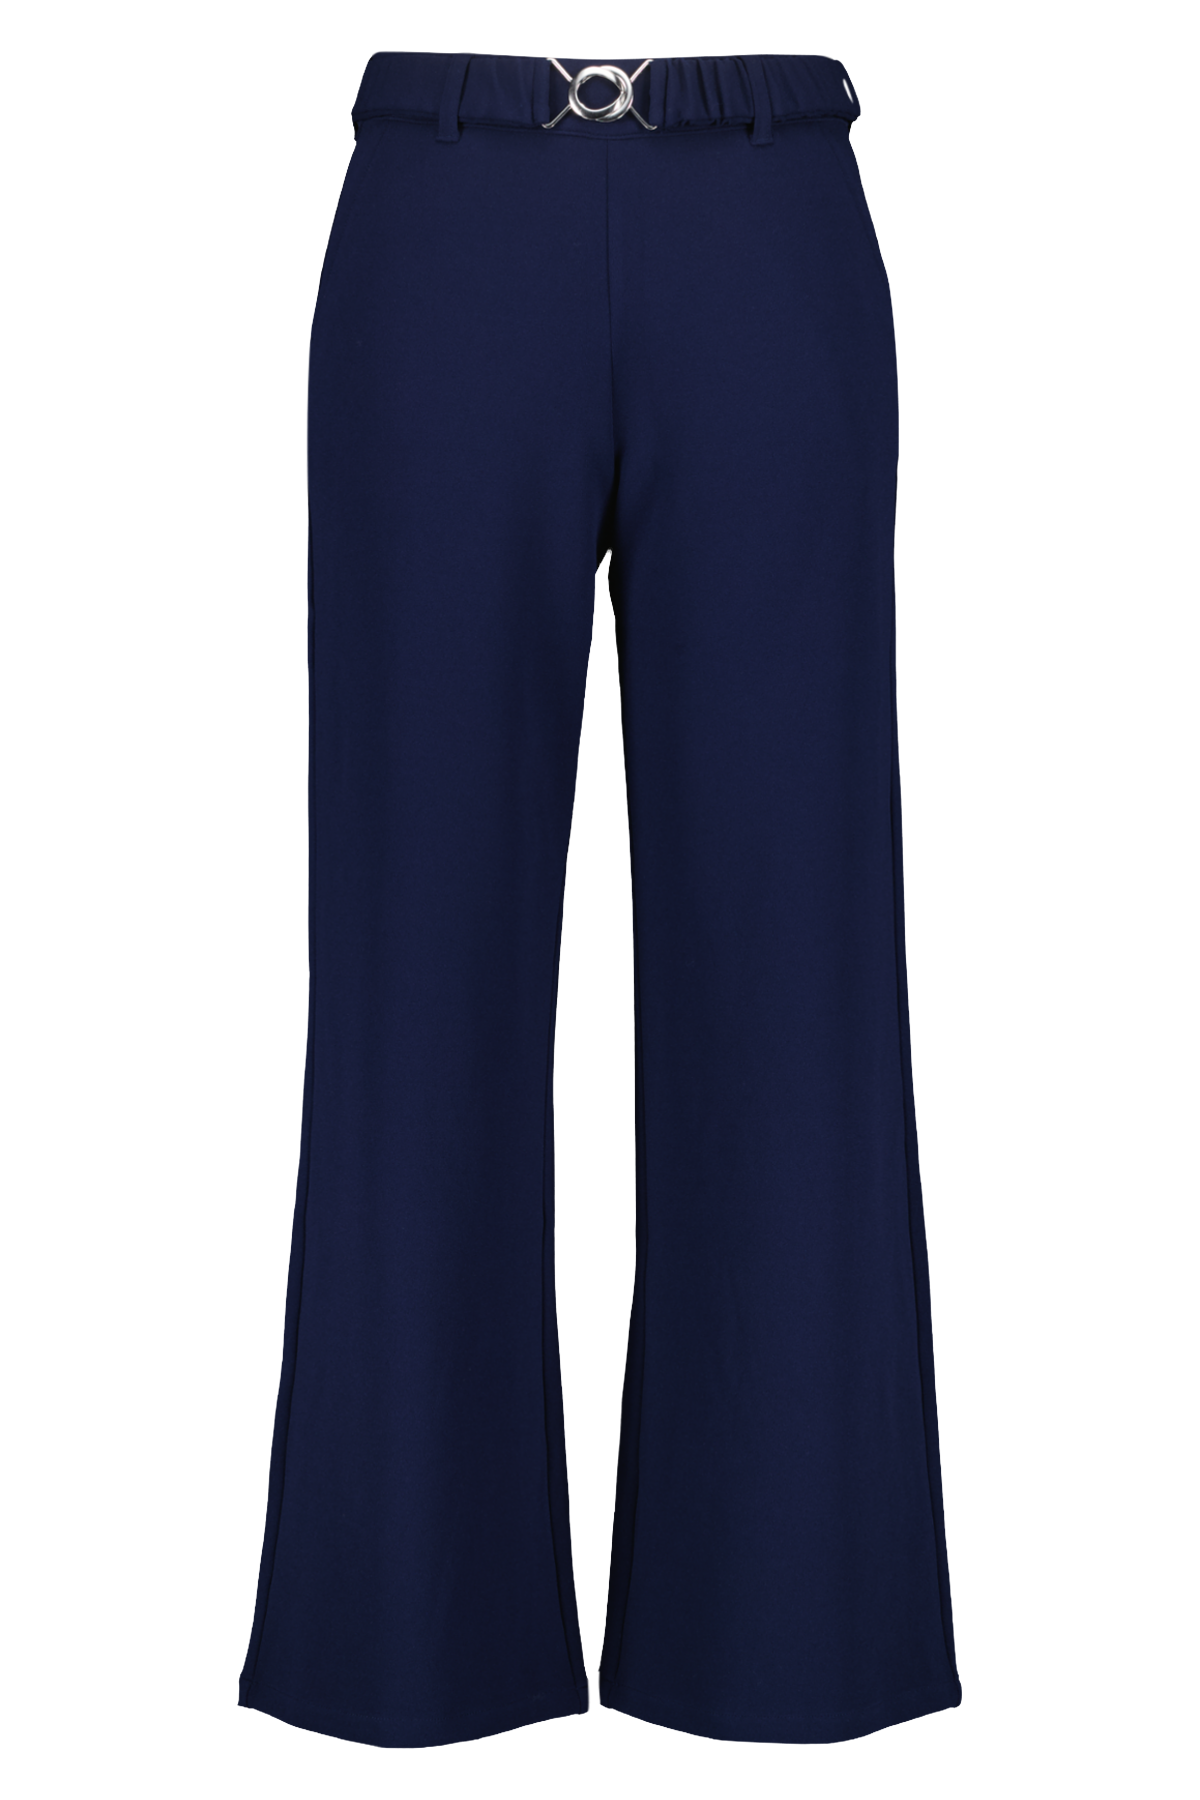 Damen Hose mit dazu Navyblau Gürtel passendem Mode MS 